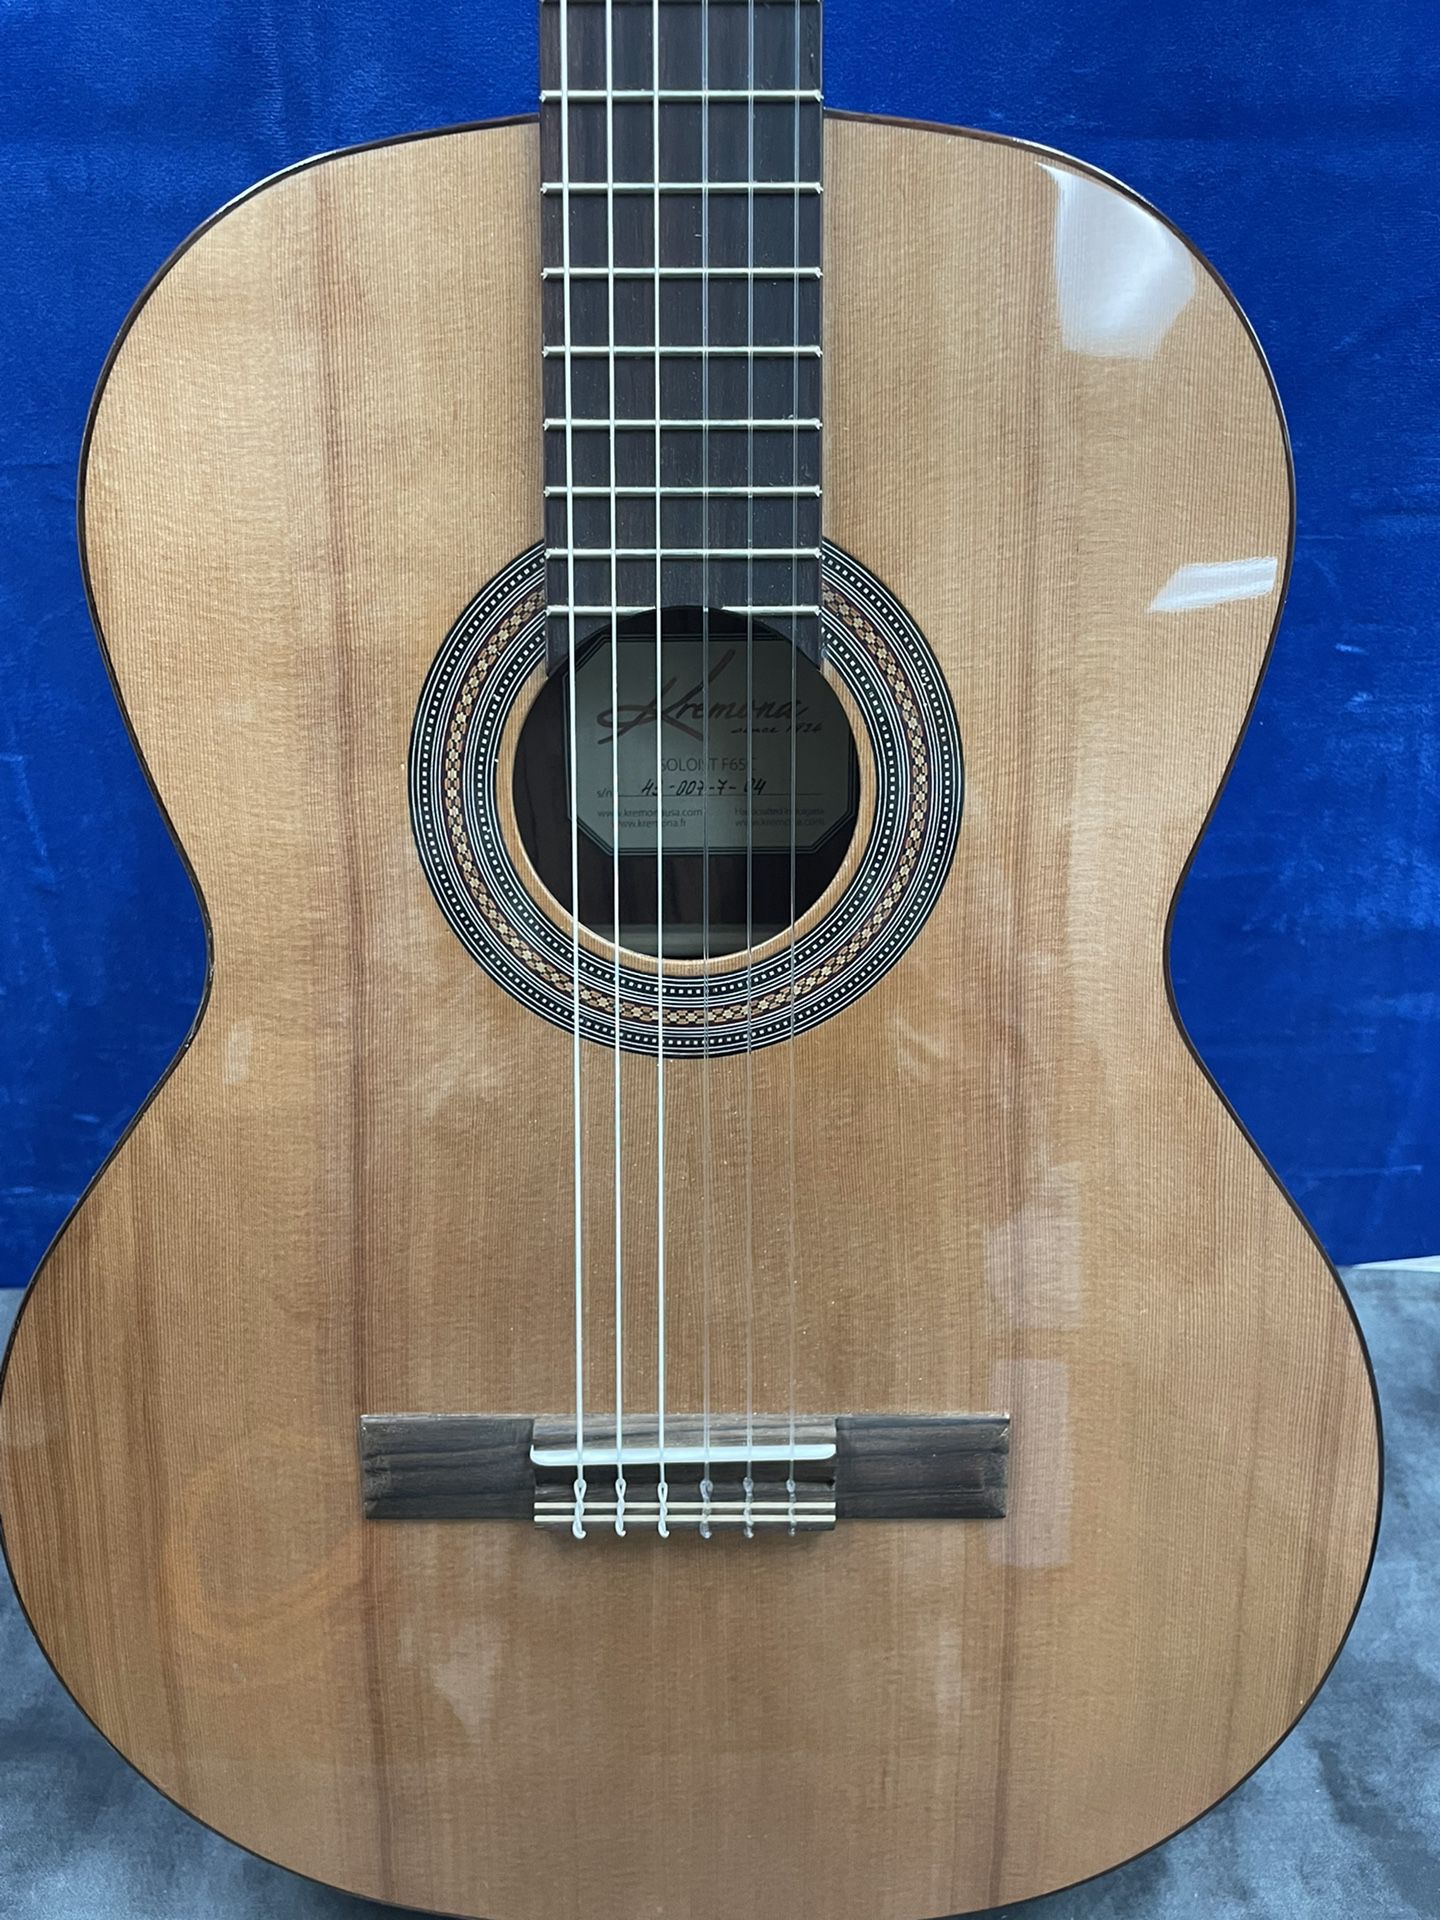 Kremona F65c Acoustic Guitar W/ Soft Gig Bag